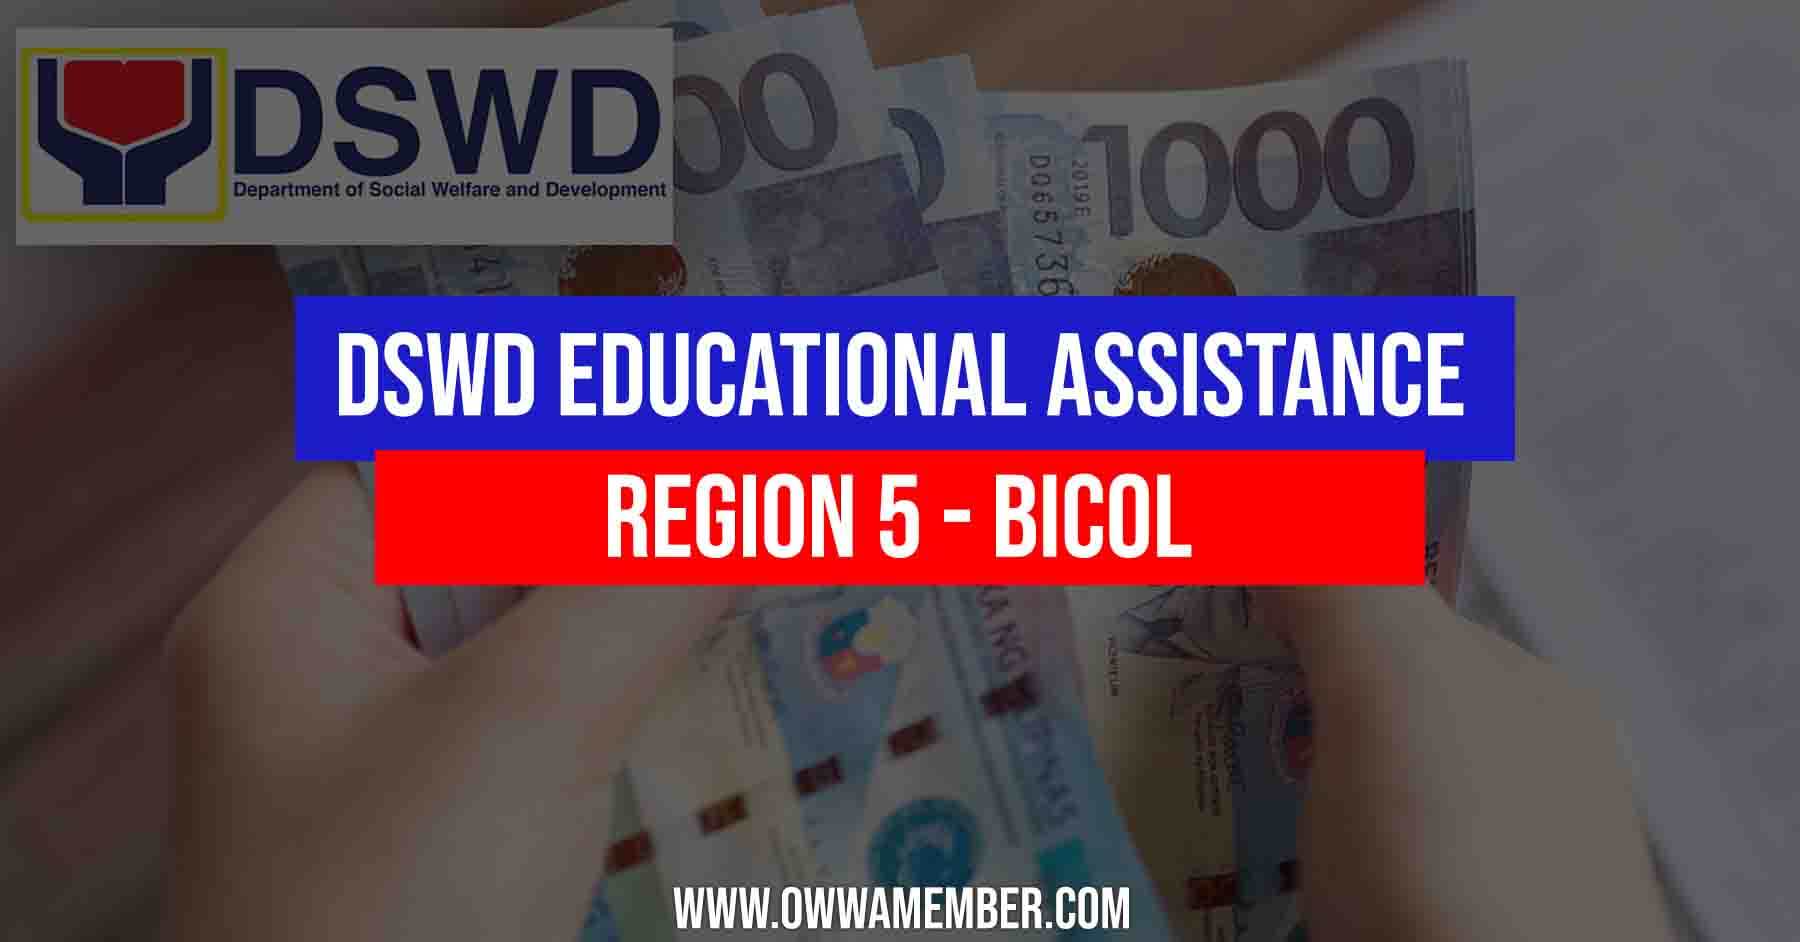 dswd region 5 educational cash assistance for students bicol region